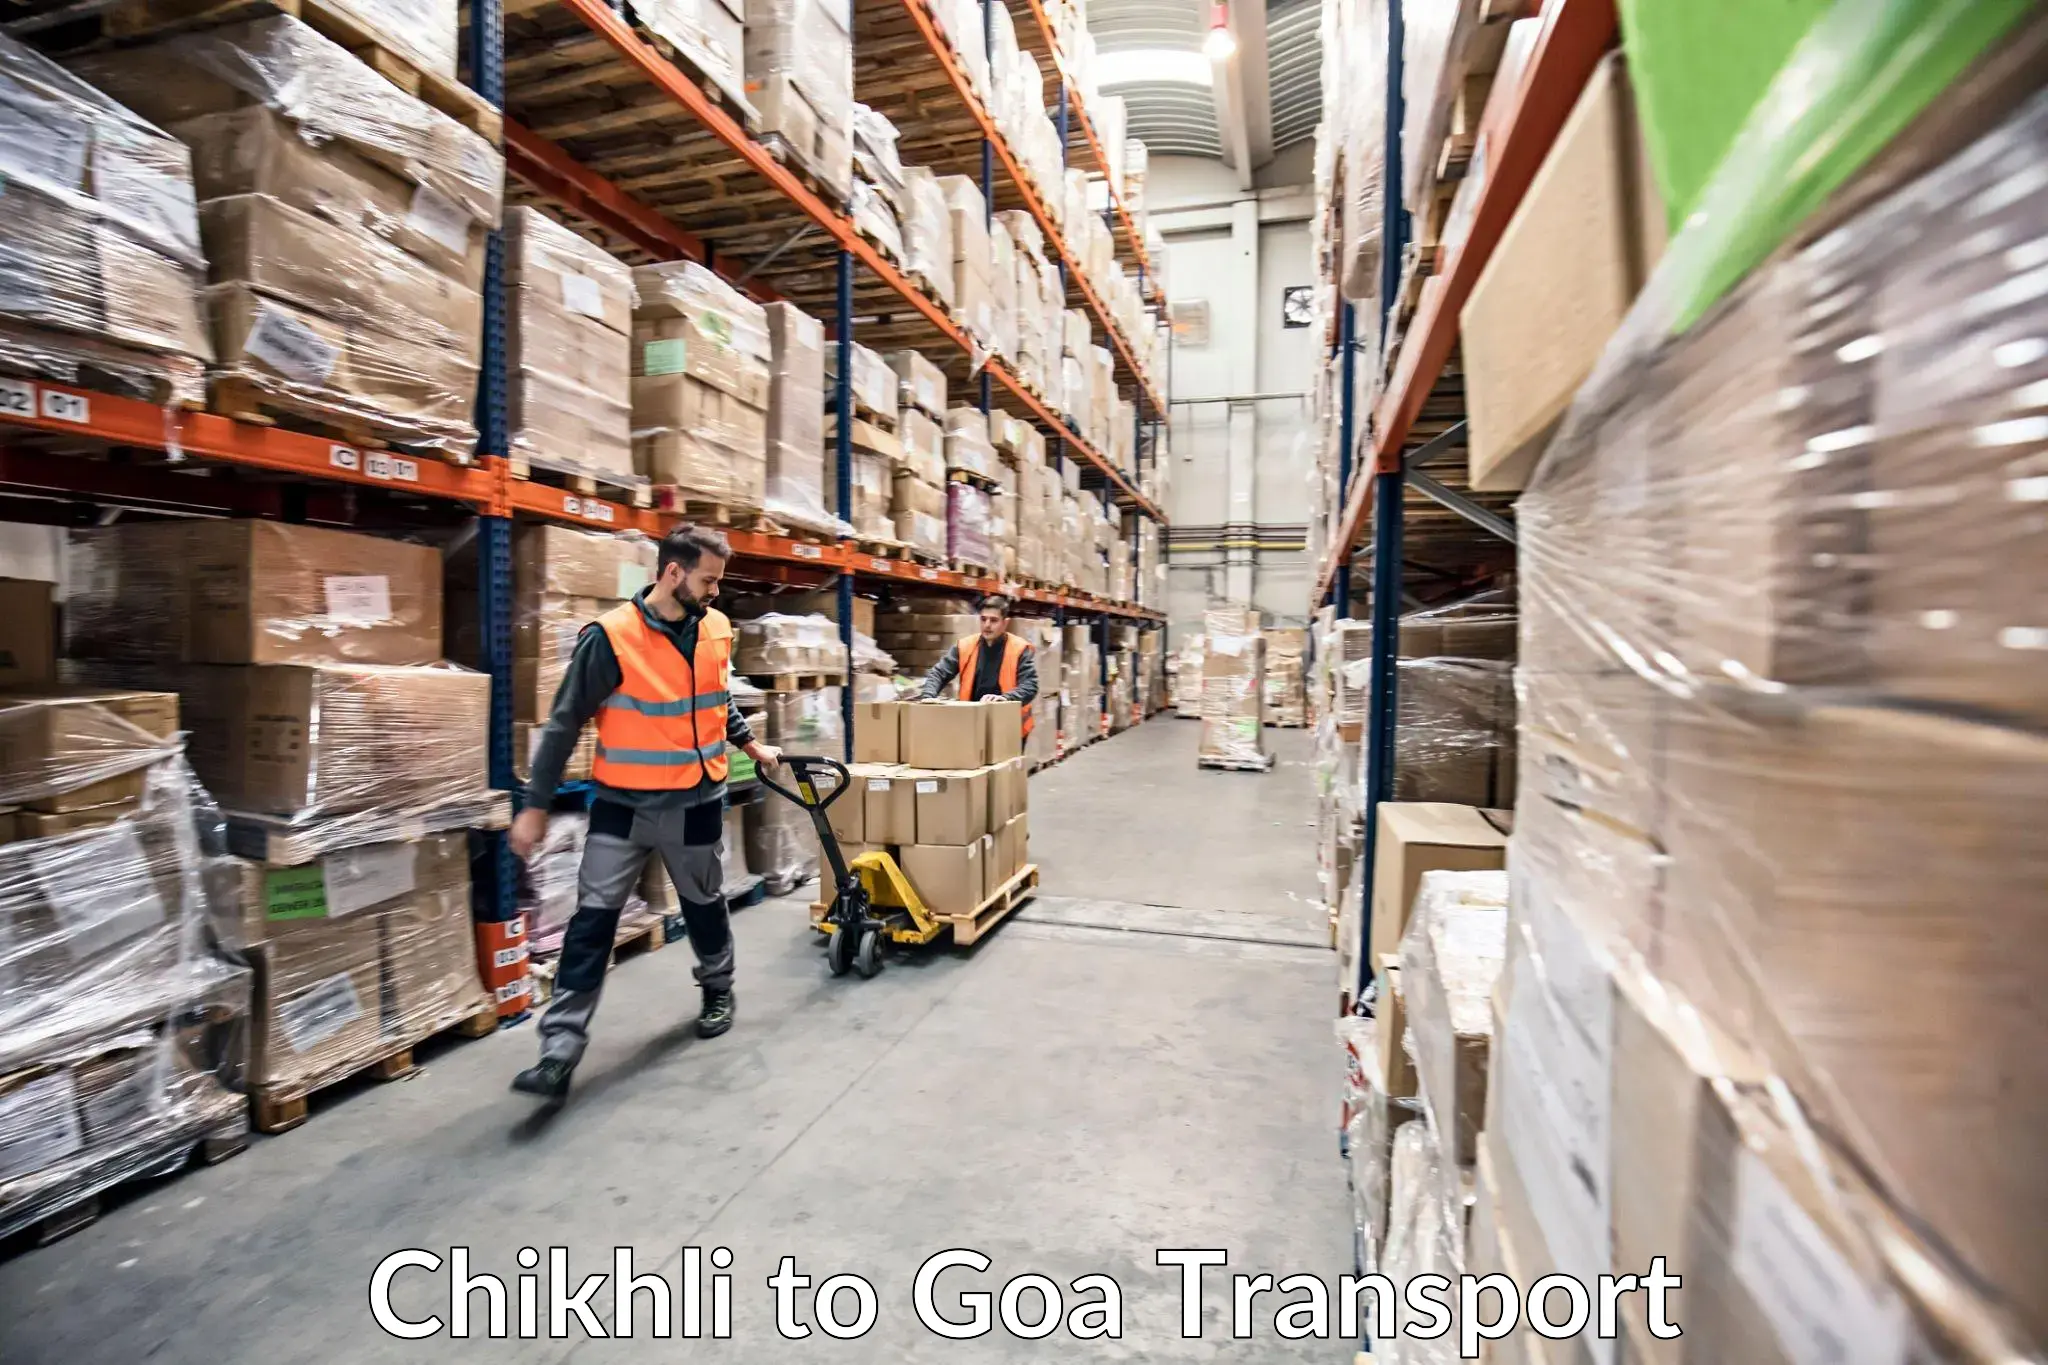 Transport in sharing Chikhli to Goa